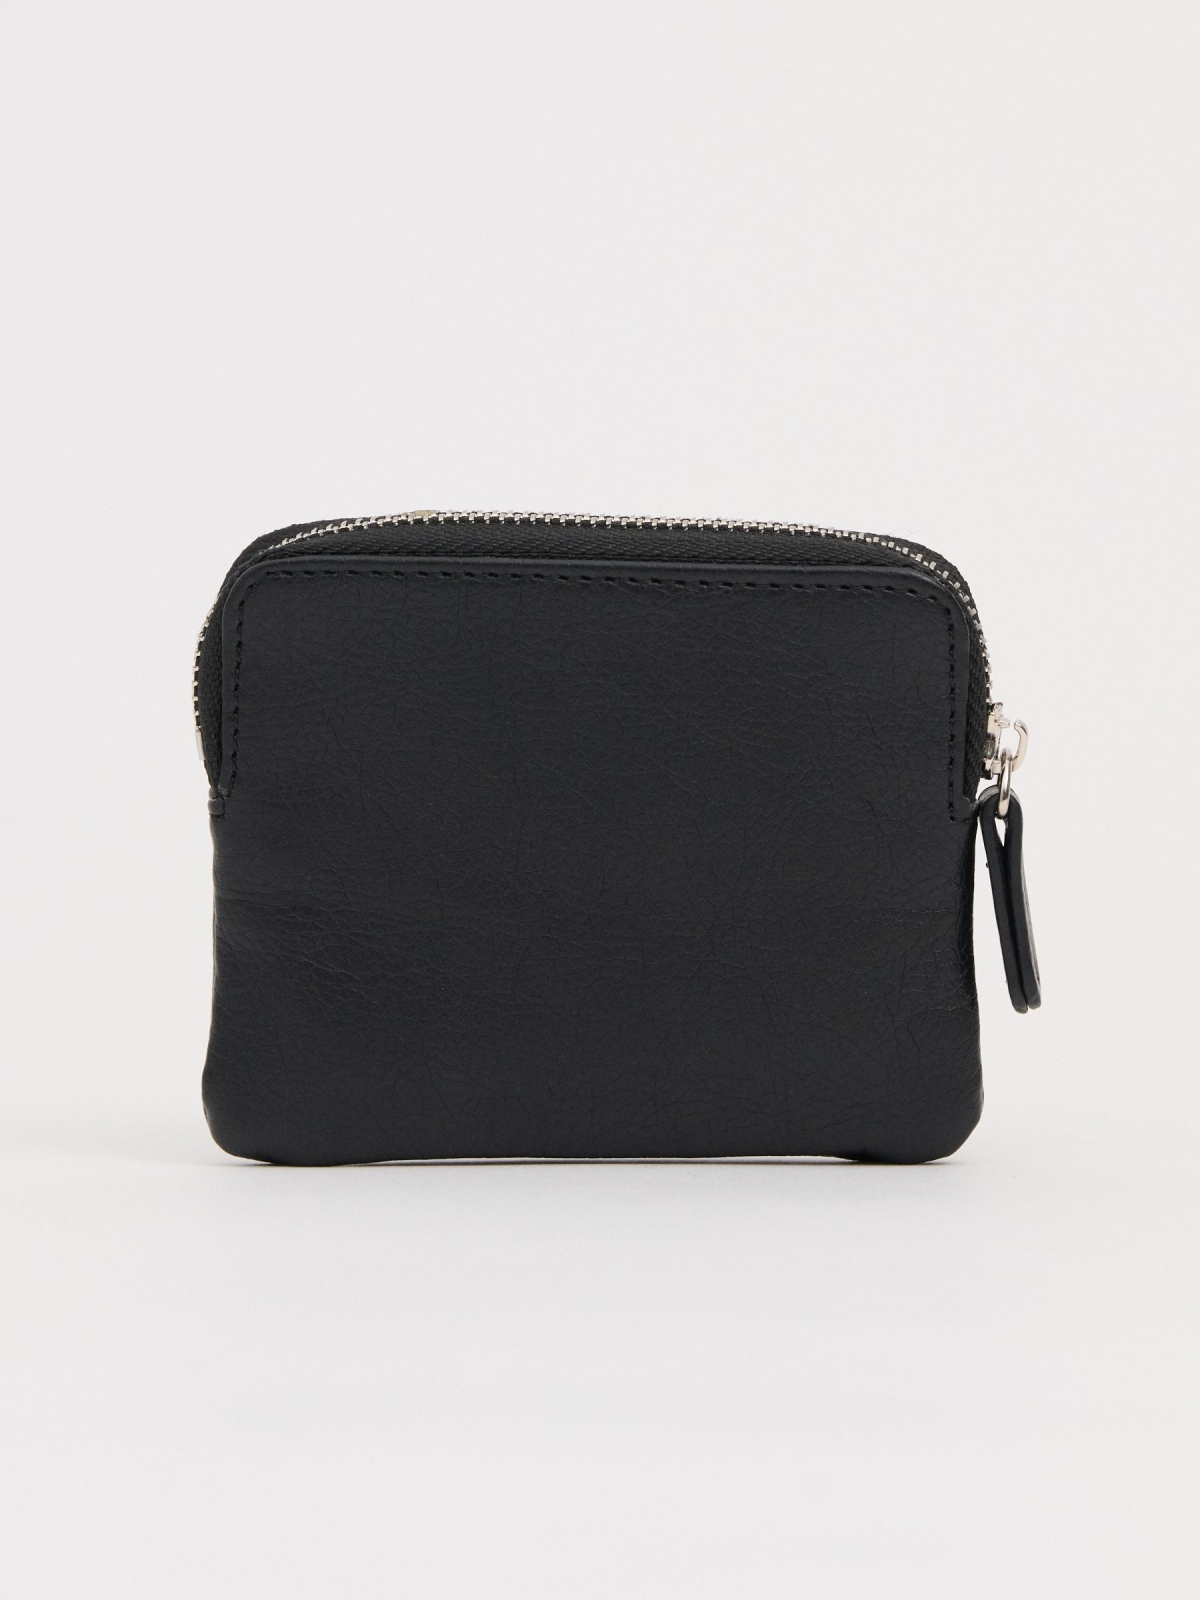 Black leather effect purse black